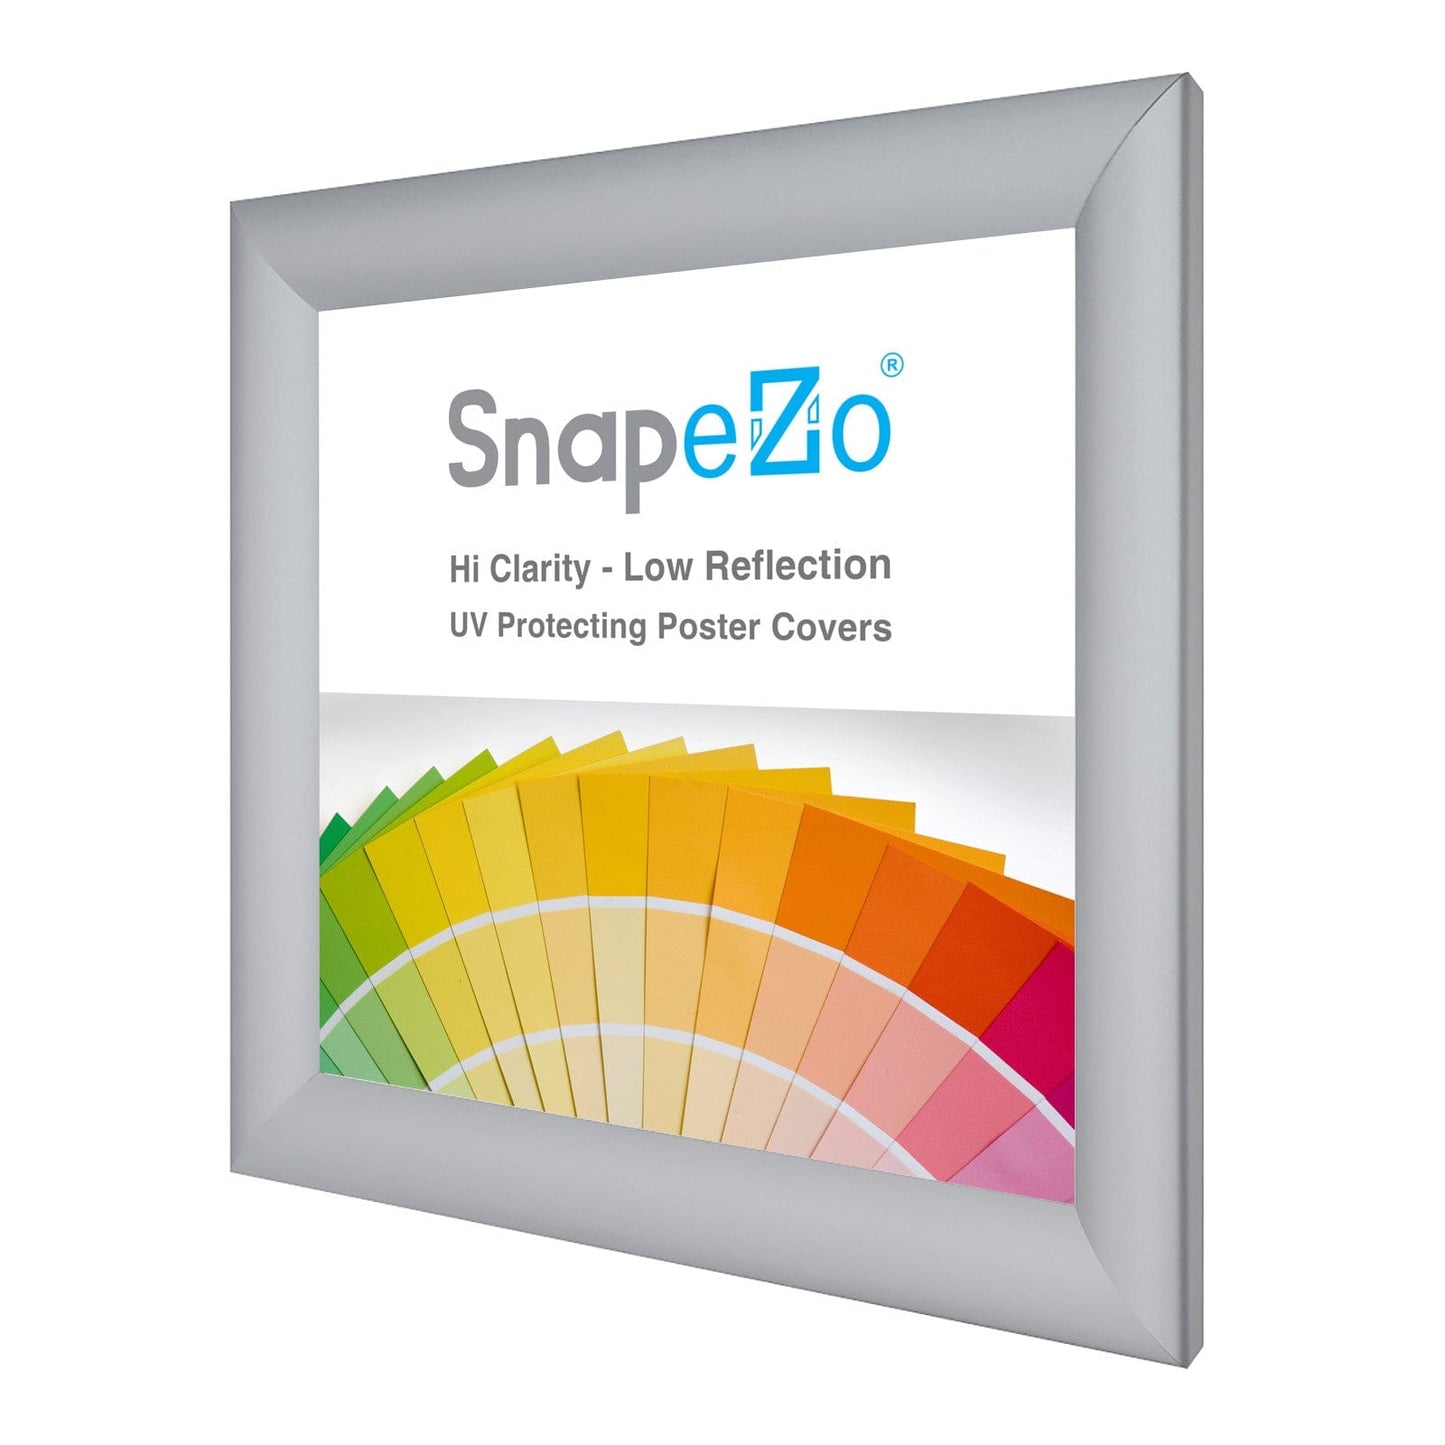 12x12 Silver SnapeZo® Snap Frame - 1.2" Profile - Snap Frames Direct